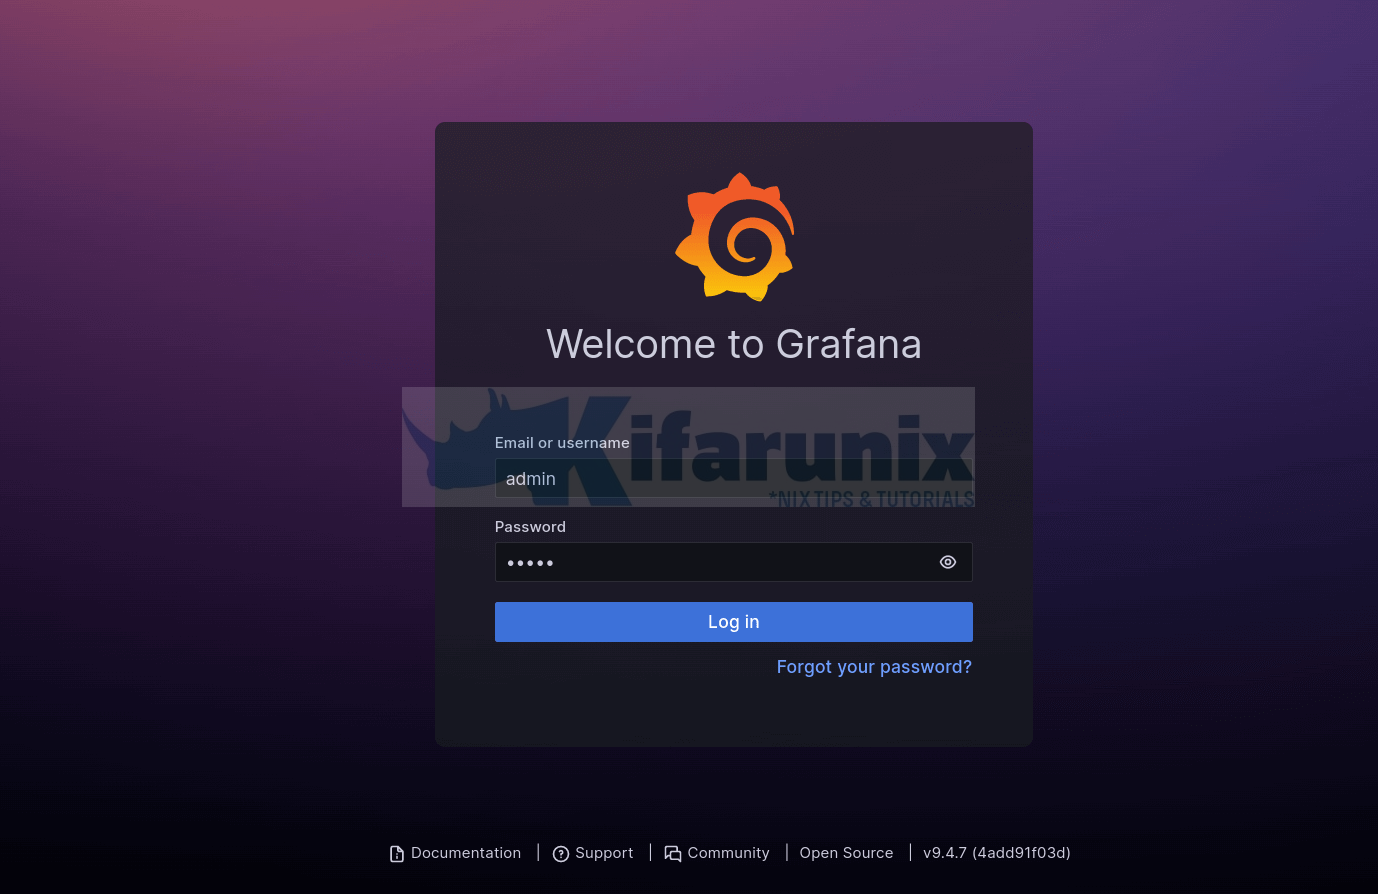 Install Grafana Data Visualization Tool on Ubuntu 18.04